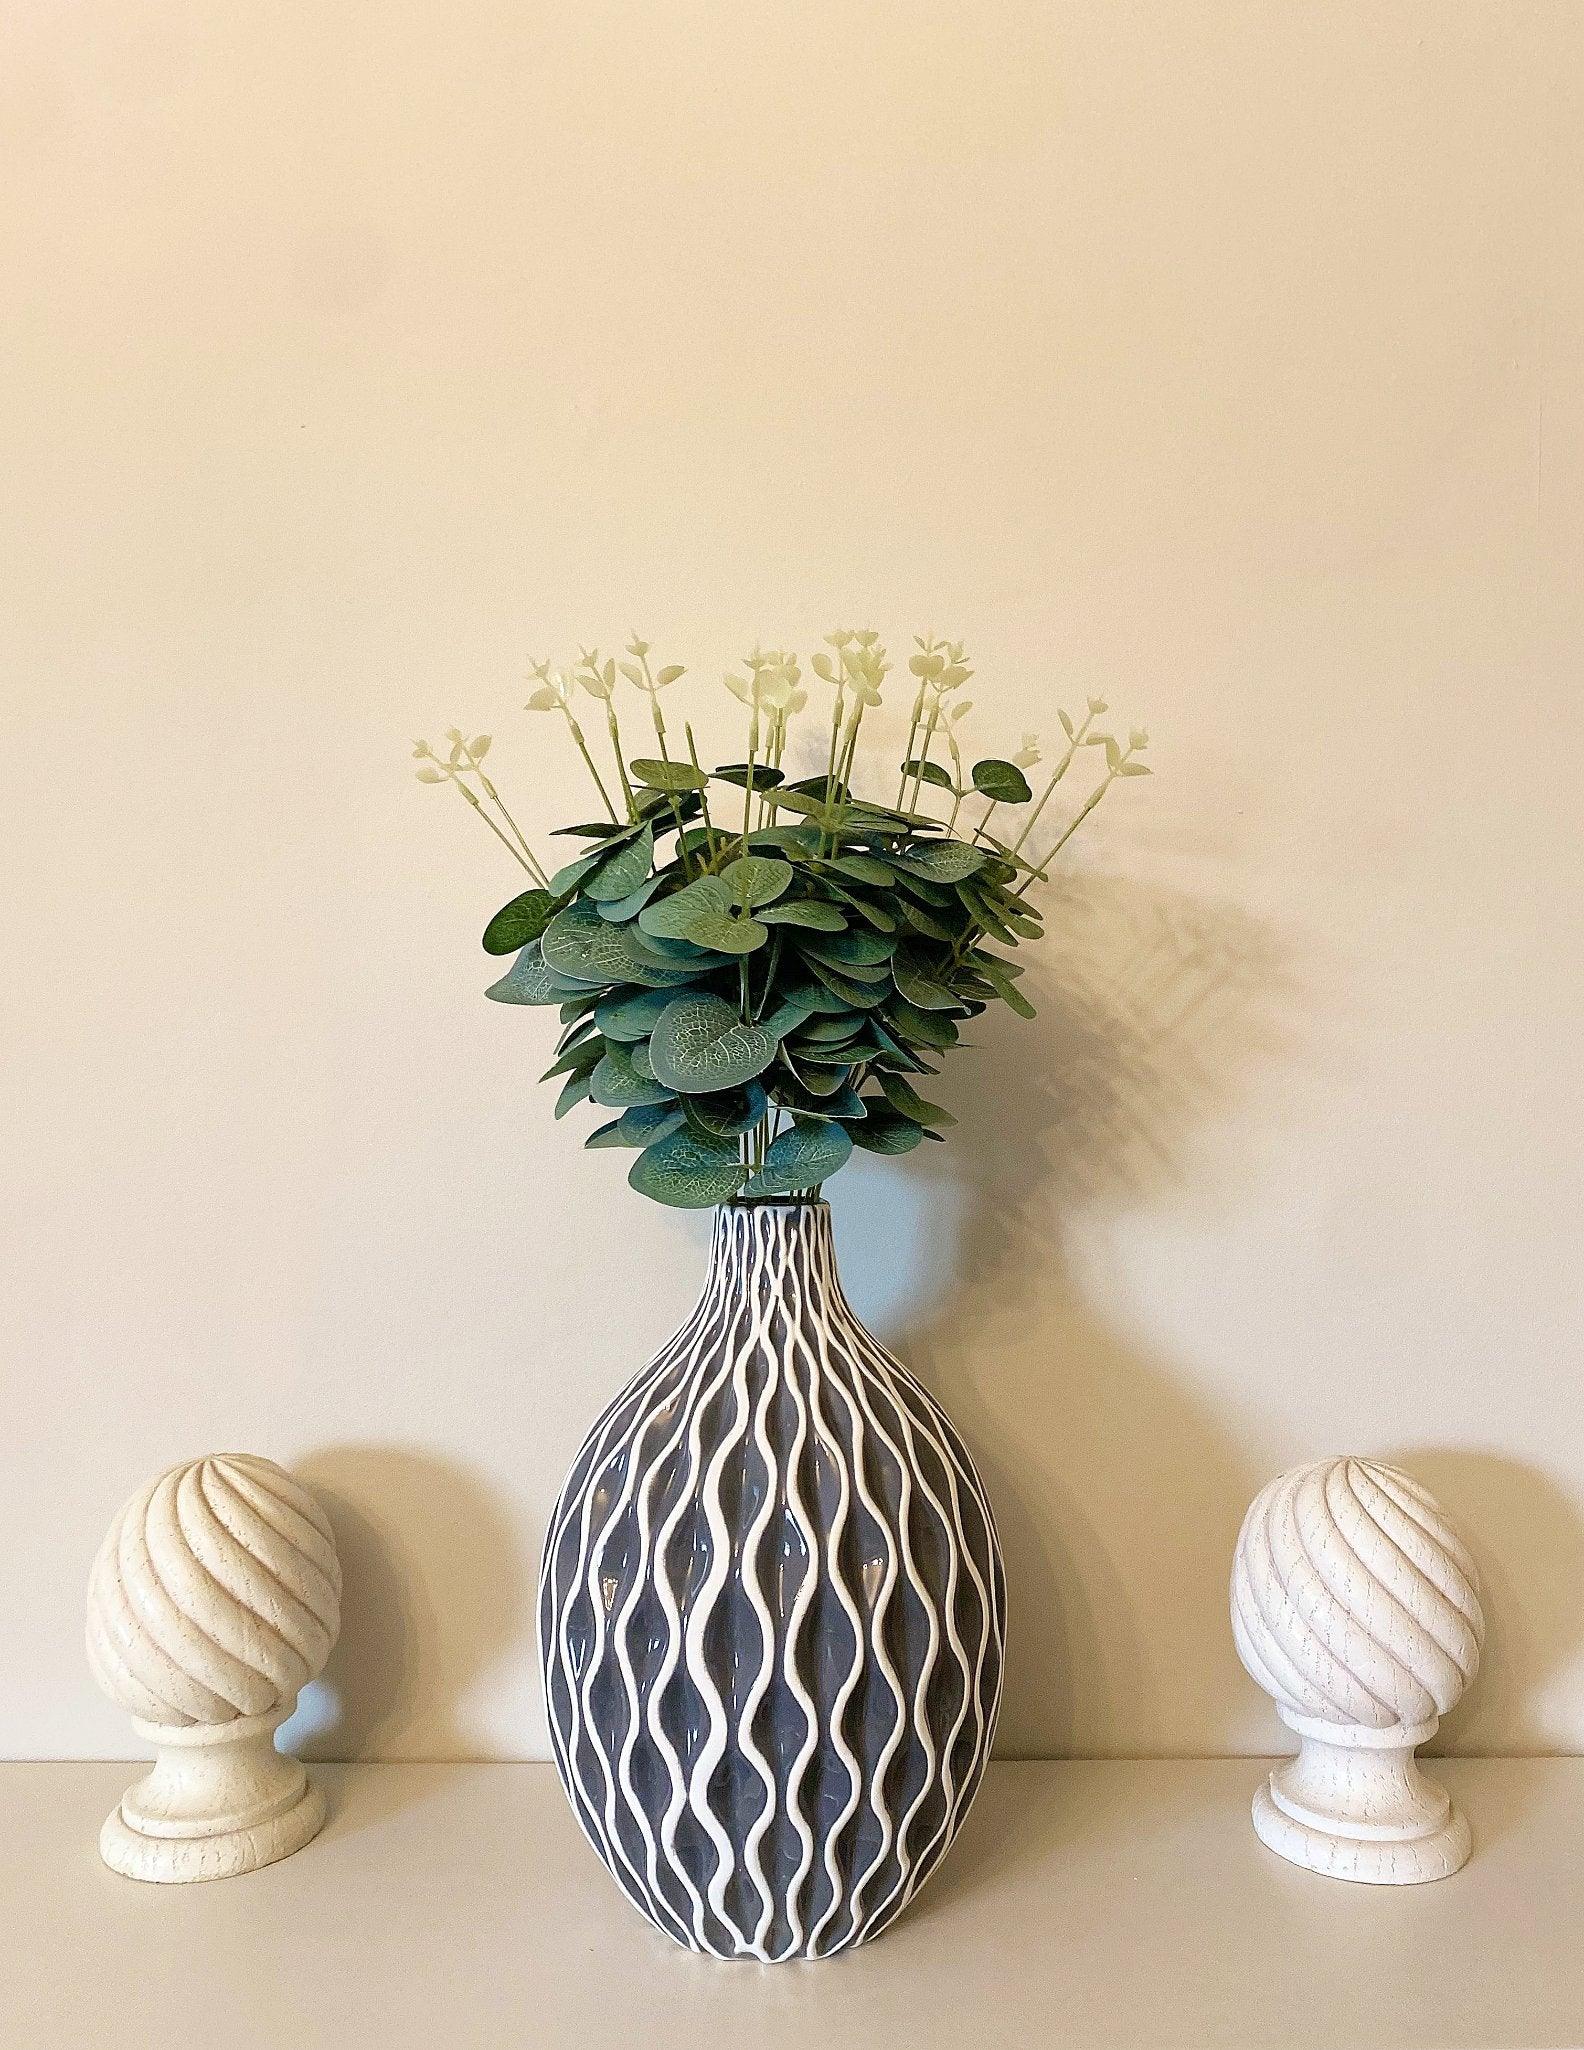 View Grey Serenity Vase information